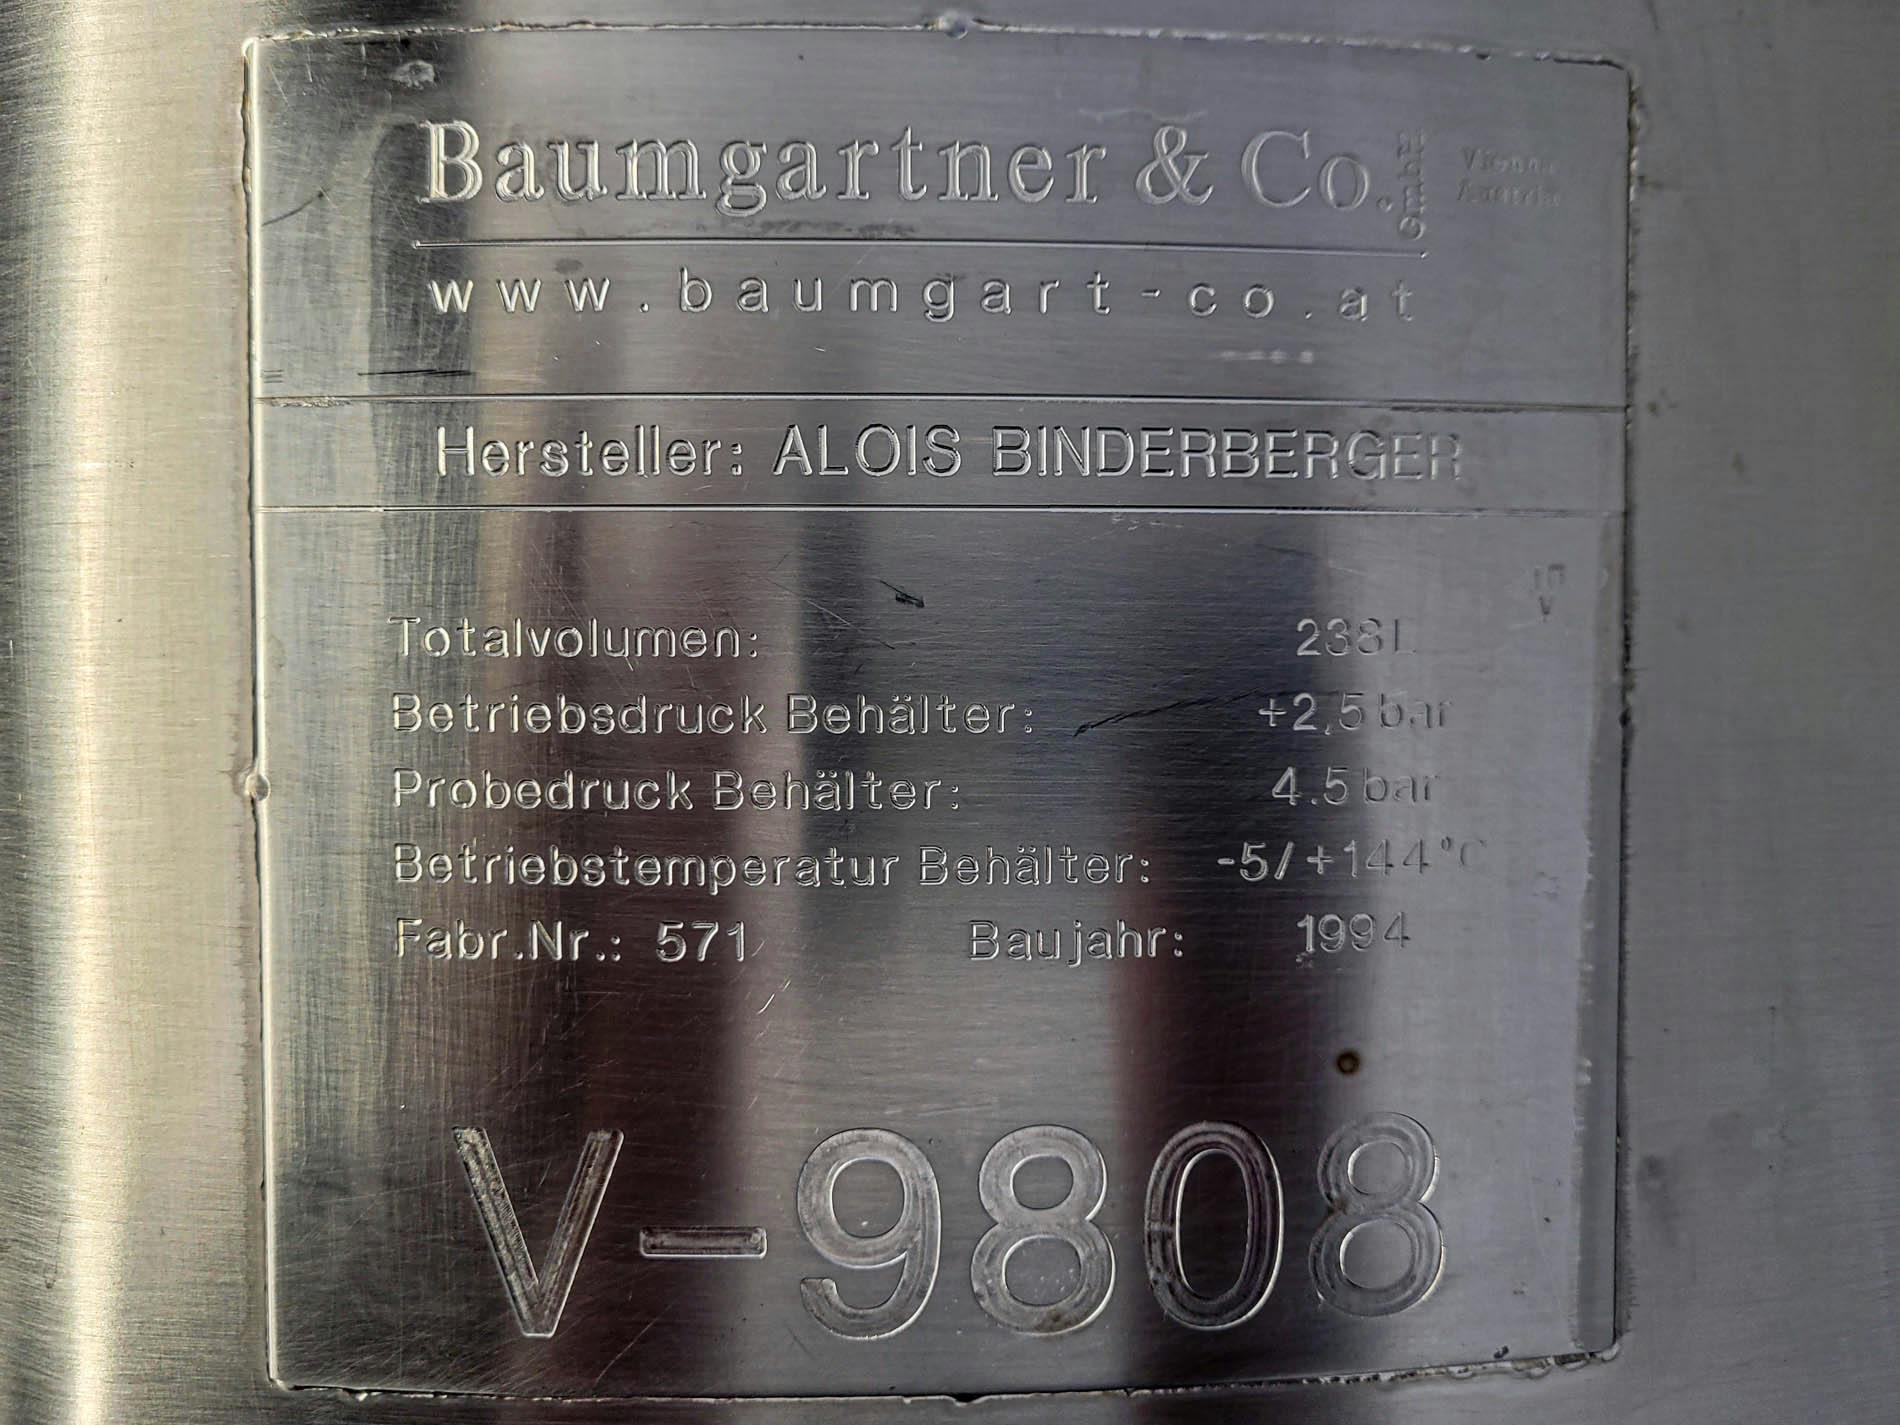 Baumgartner 238 Ltr. - Serbatoio a pressione - image 11